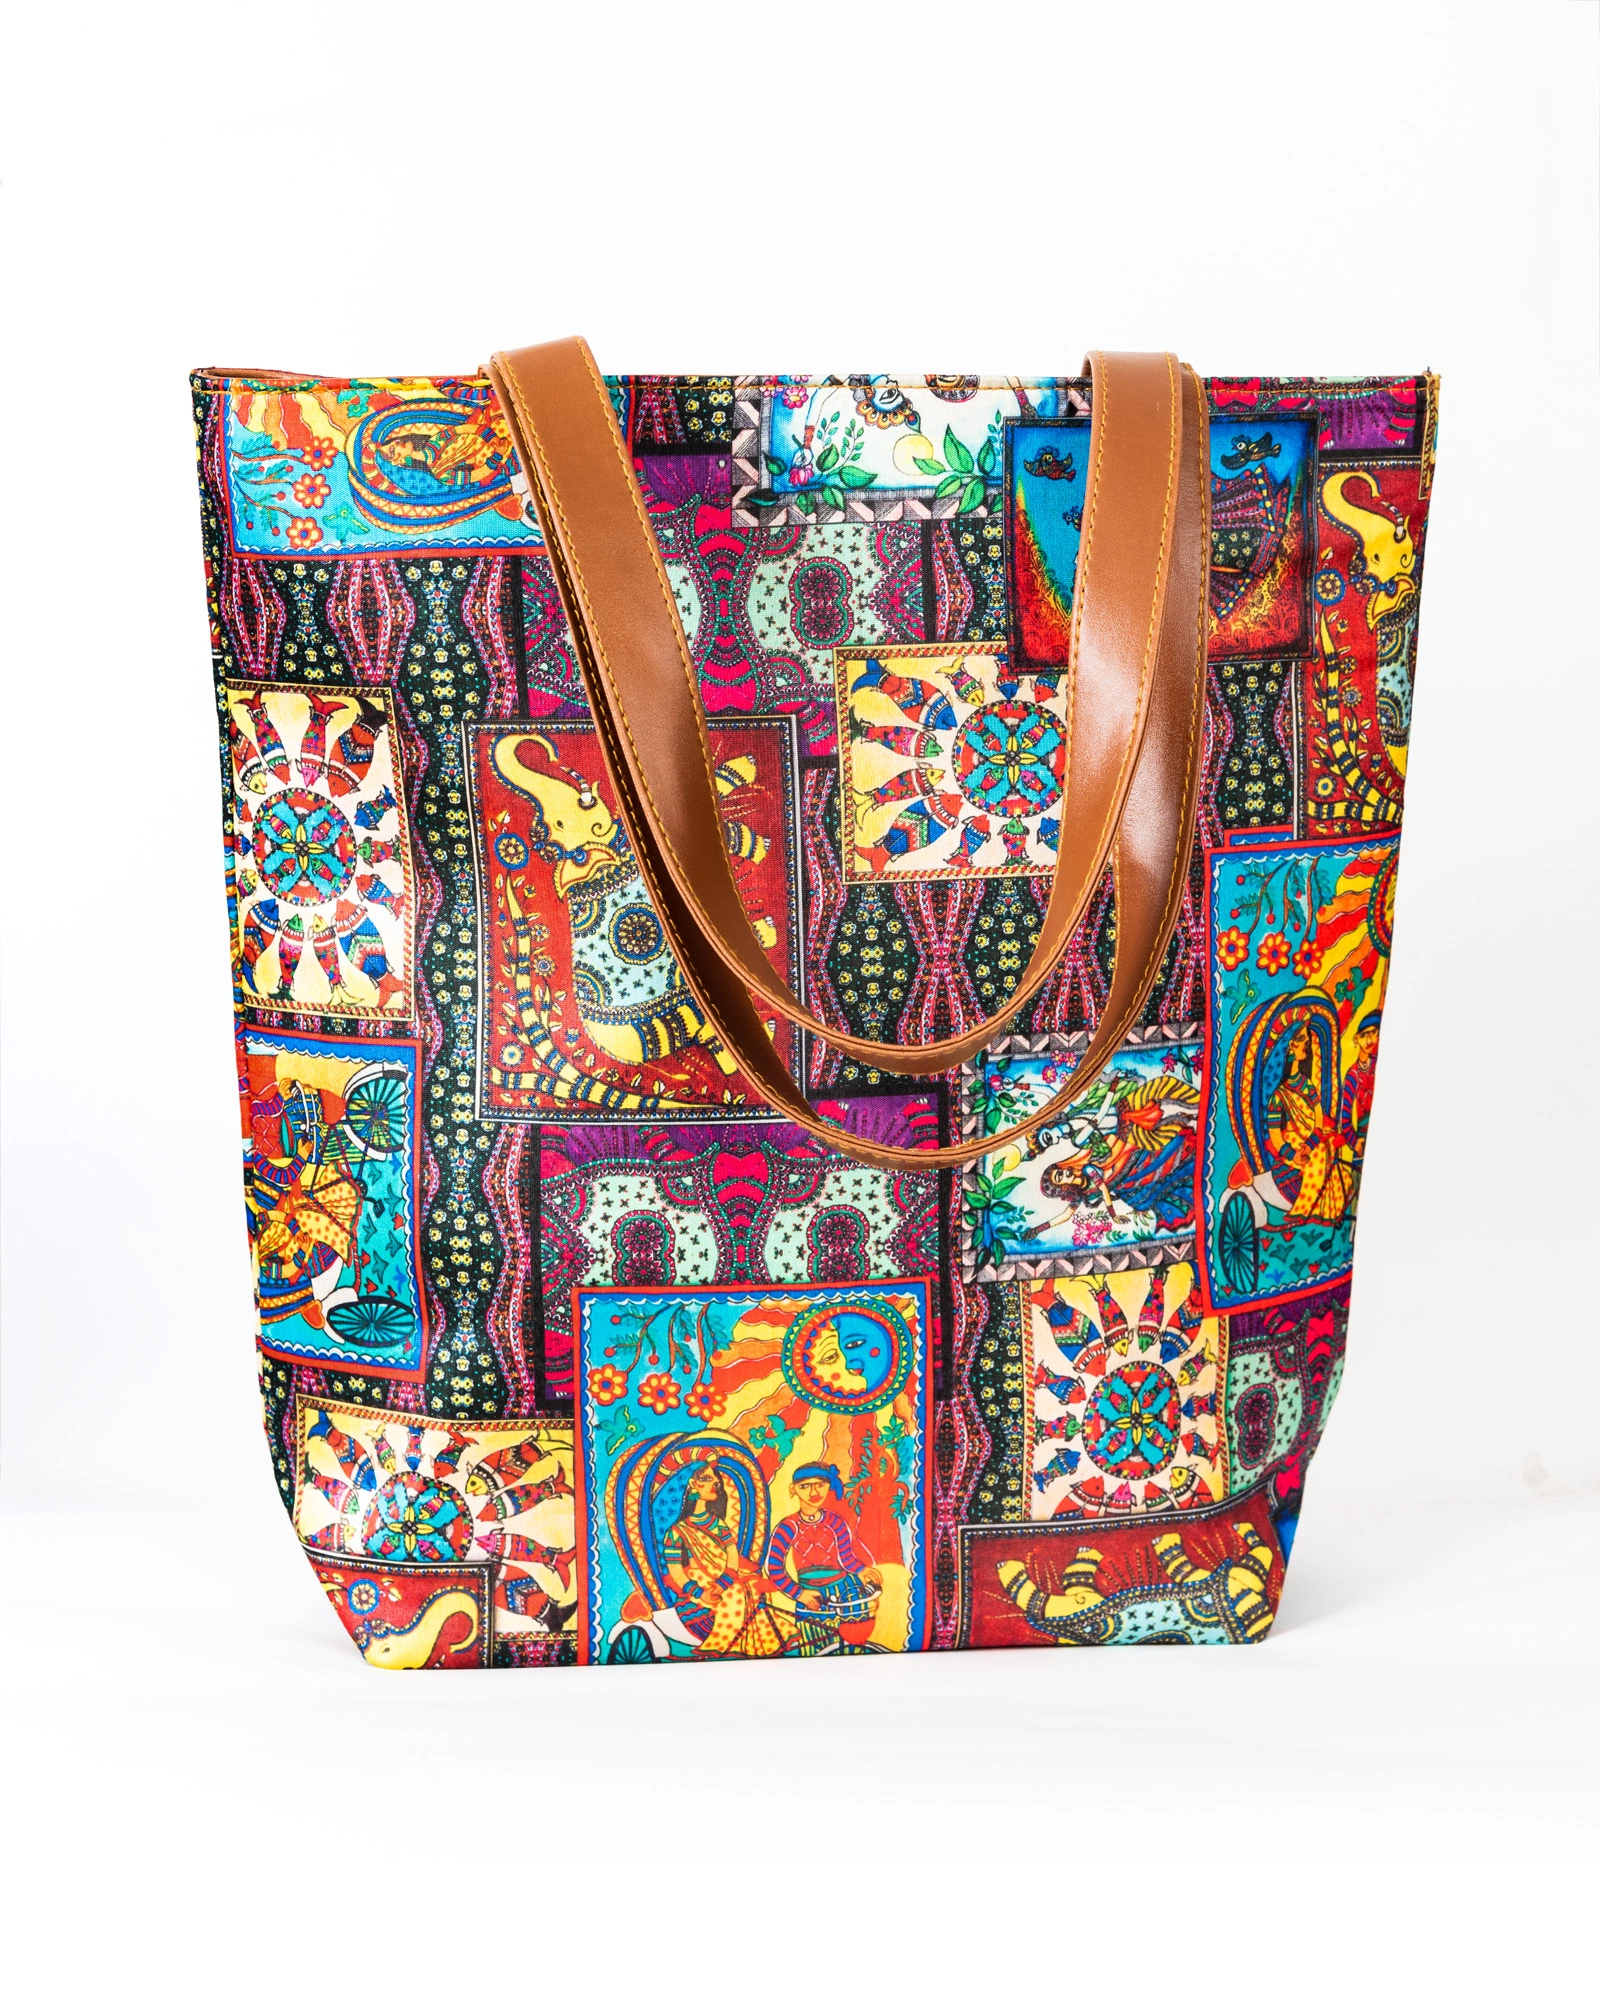 Buy Traditional Indian Potli Women Handbag Handmade Bag Online in India   Etsy